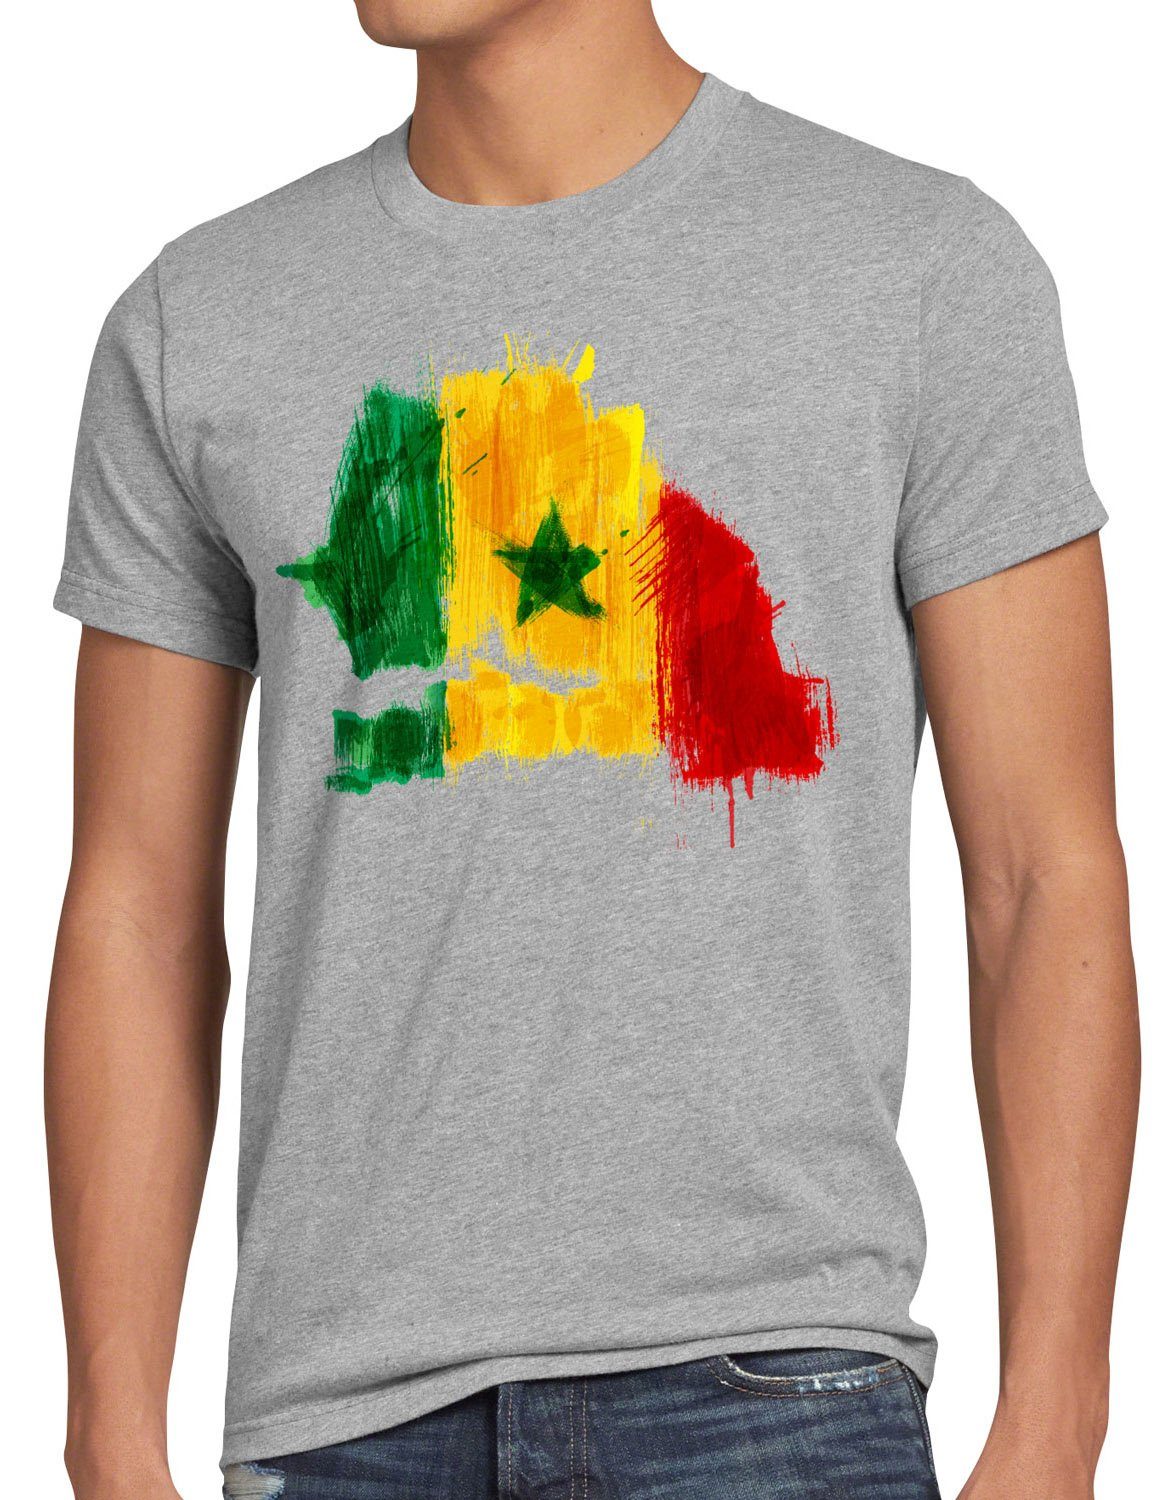 Flagge style3 Senegal WM grau meliert T-Shirt Fahne EM Print-Shirt Fußball Afrika Sport Herren